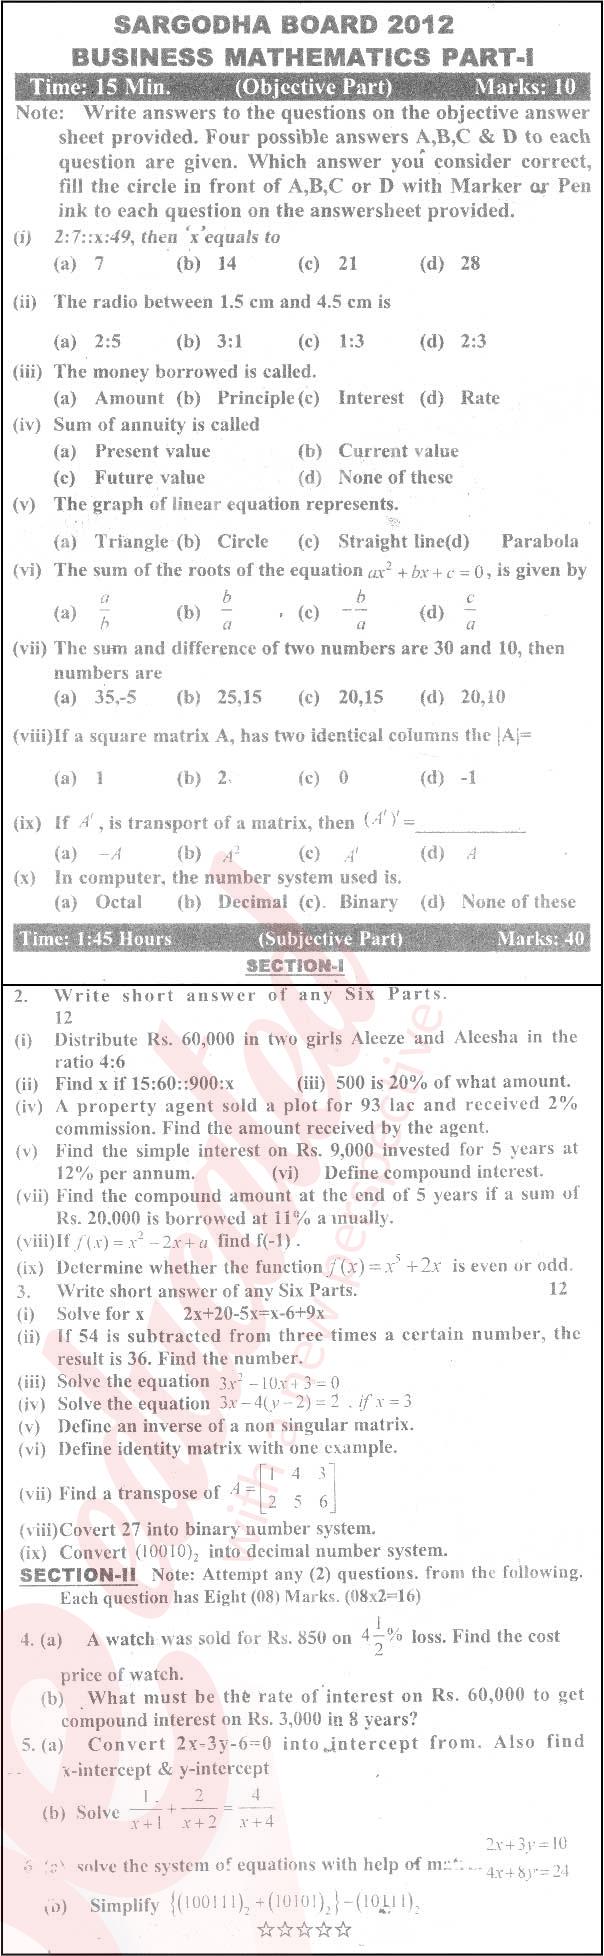 Business Mathematics ICOM Part 1 Past Paper Group 1 BISE Sargodha 2012